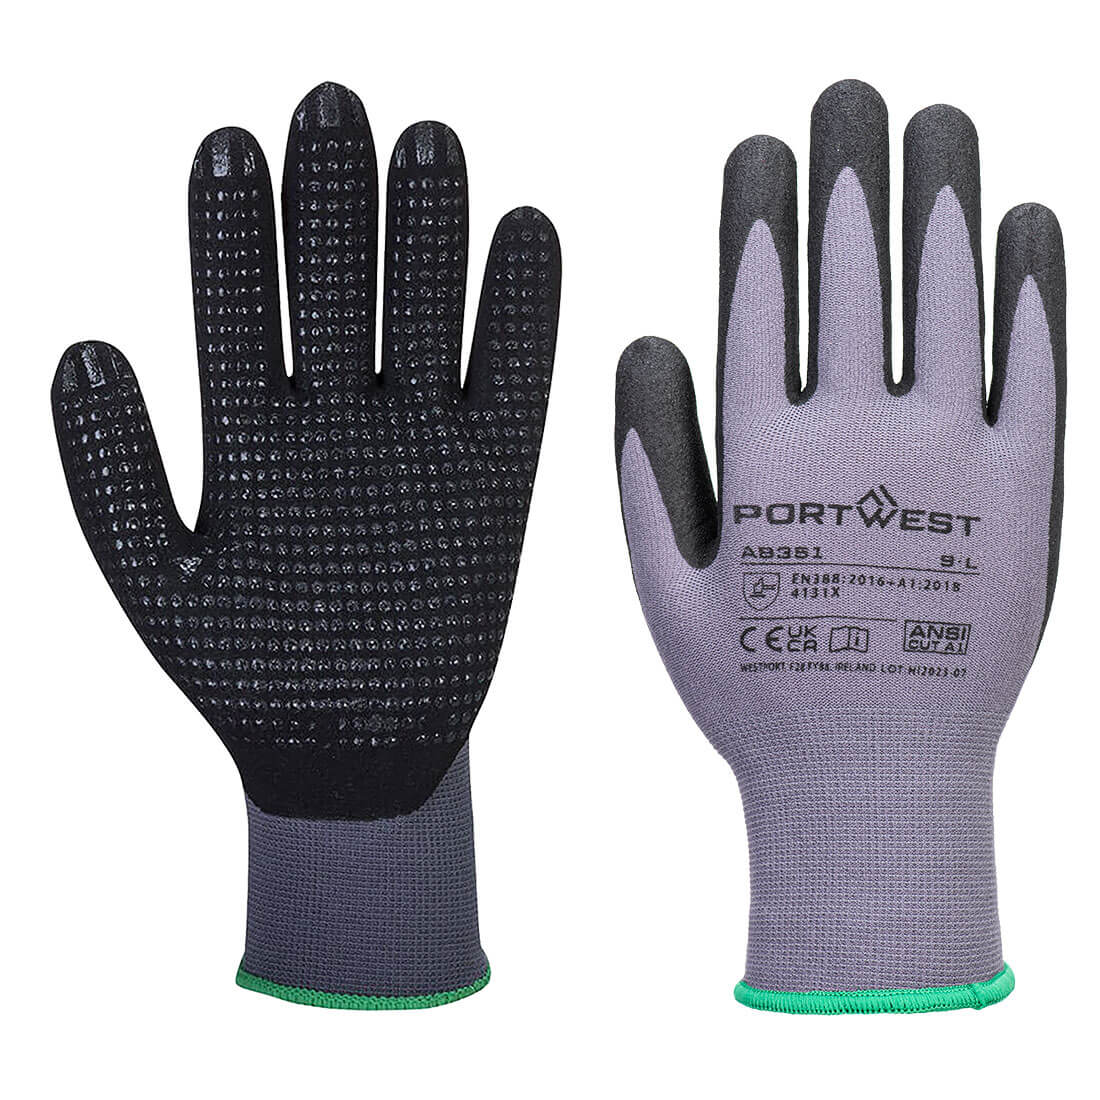 Grip 15 Nitrile Dot Glove (Pk12)  (AB351)